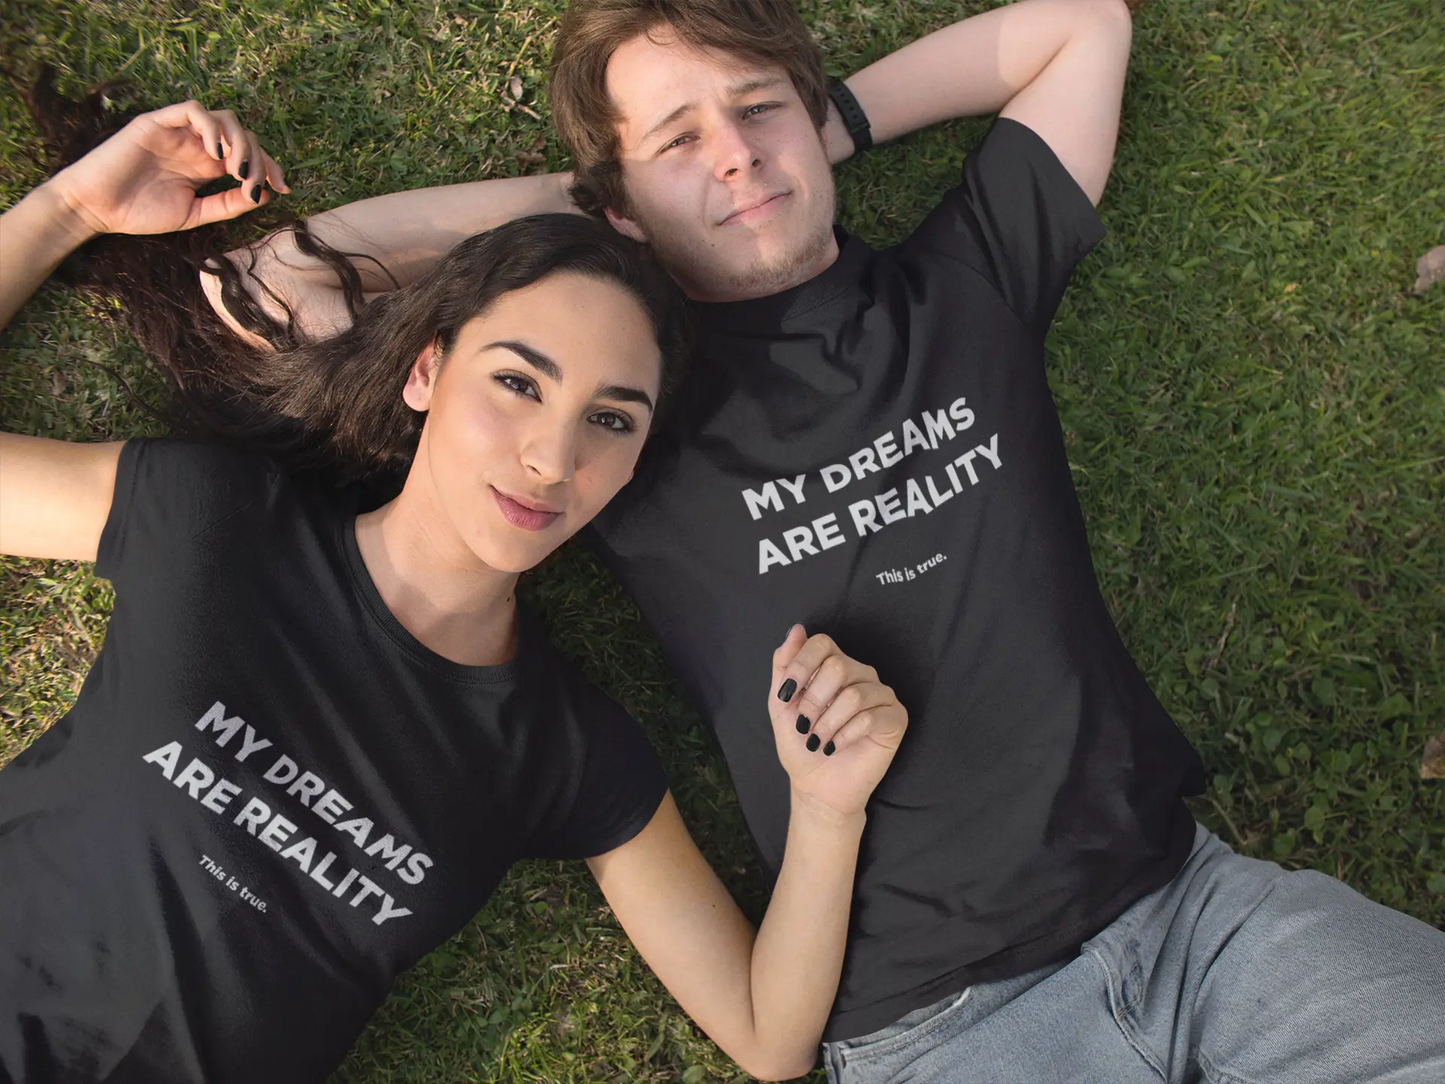 Dreams Into Reality Premium Men's T-shirt